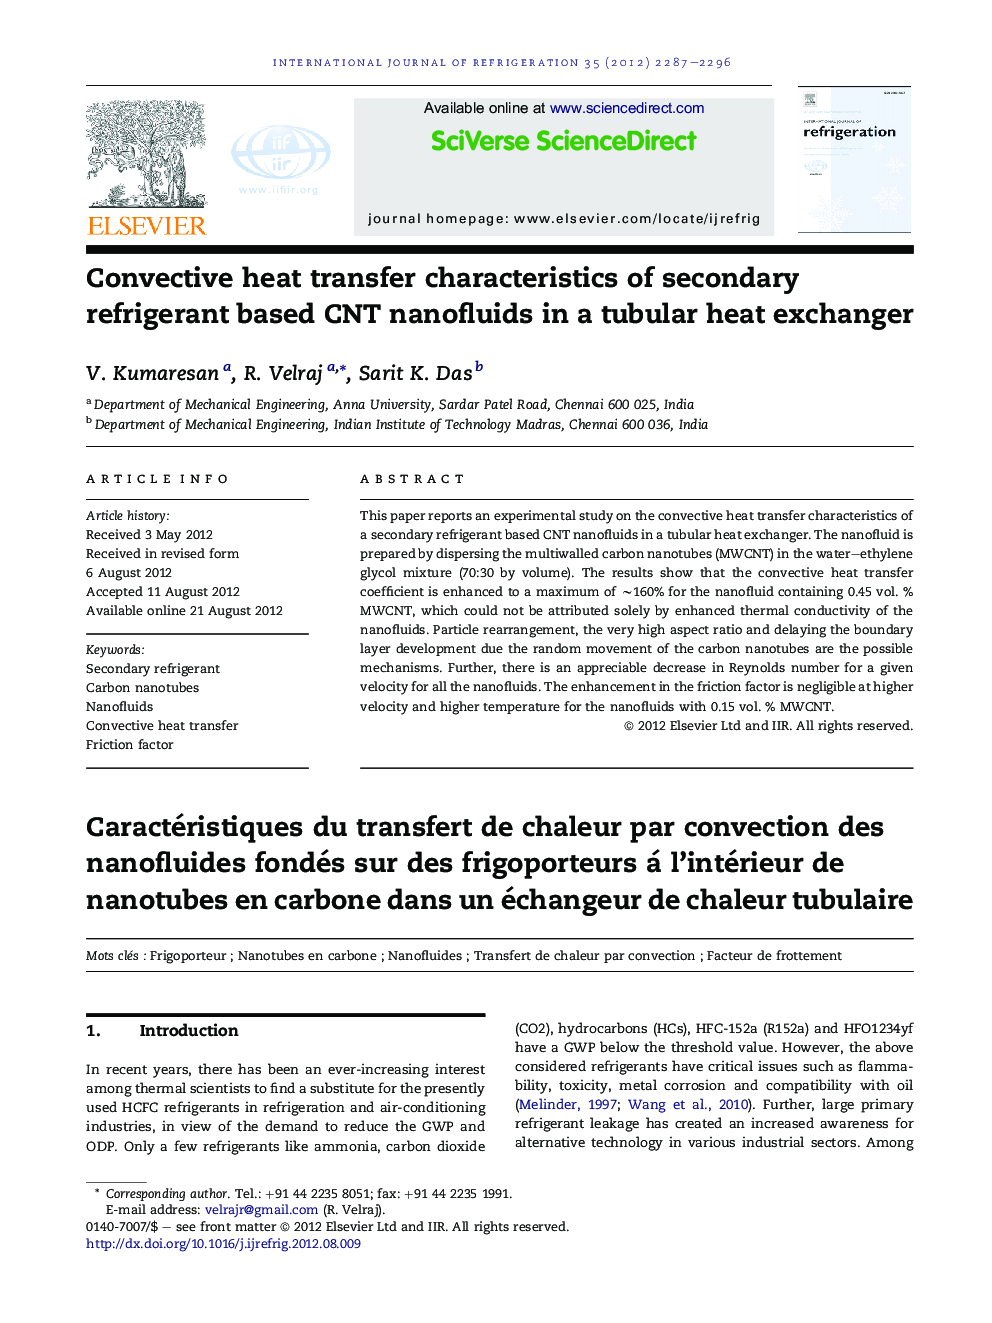 Convective heat transfer characteristics of secondary refrigerant based CNT nanofluids in a tubular heat exchanger